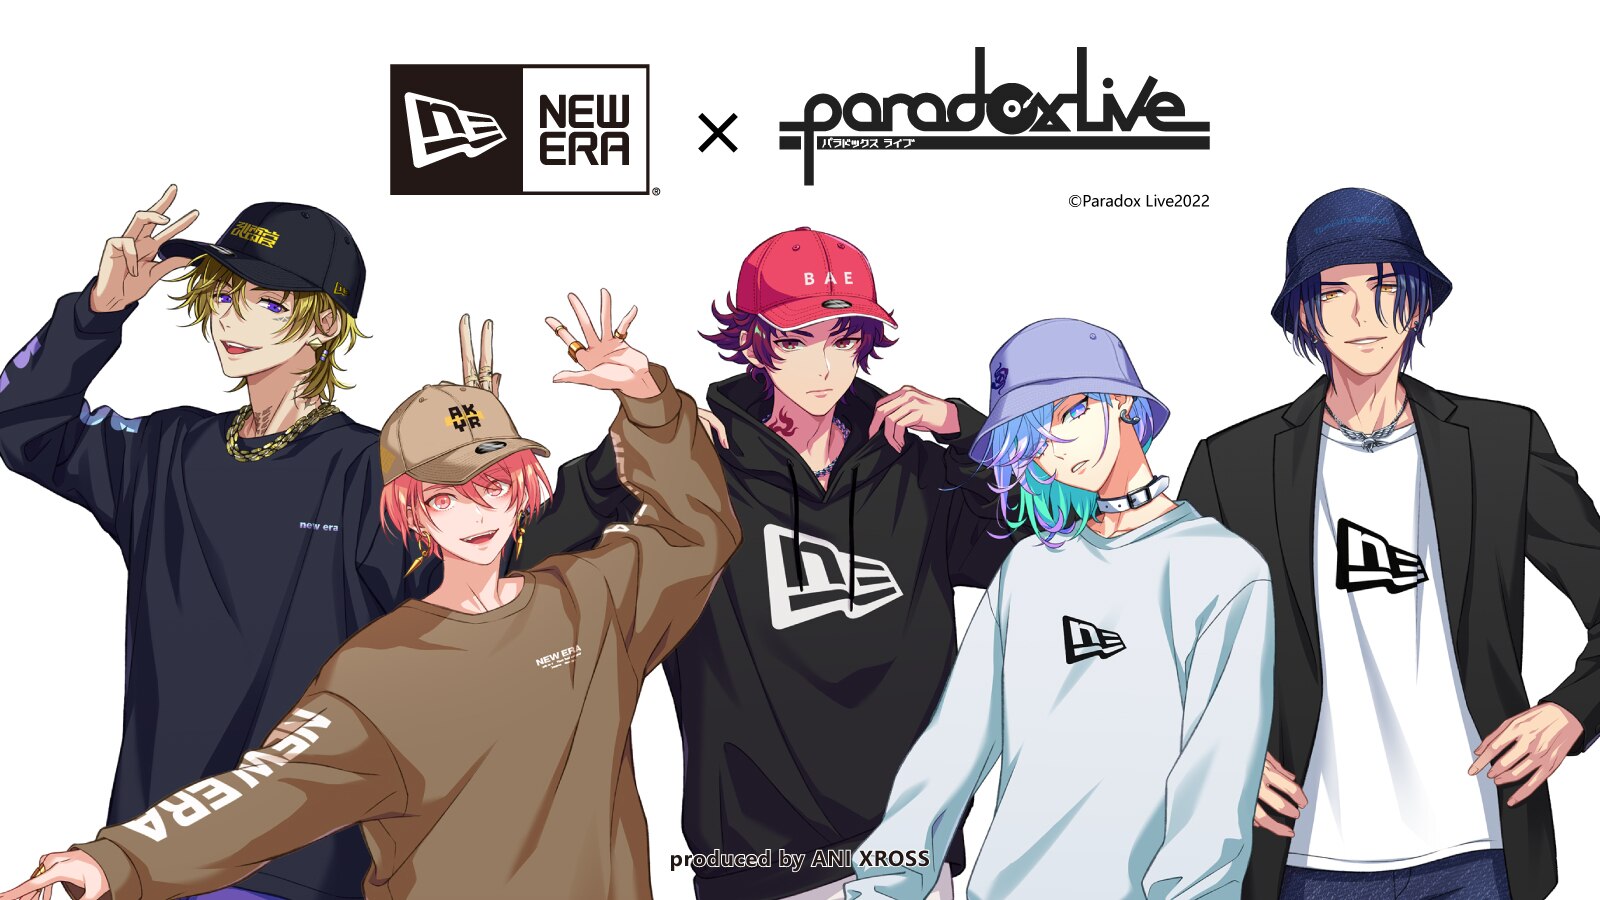 NEW ERA】コラボ『Paradox Live × NEW ERA』第一弾collaboration発表 